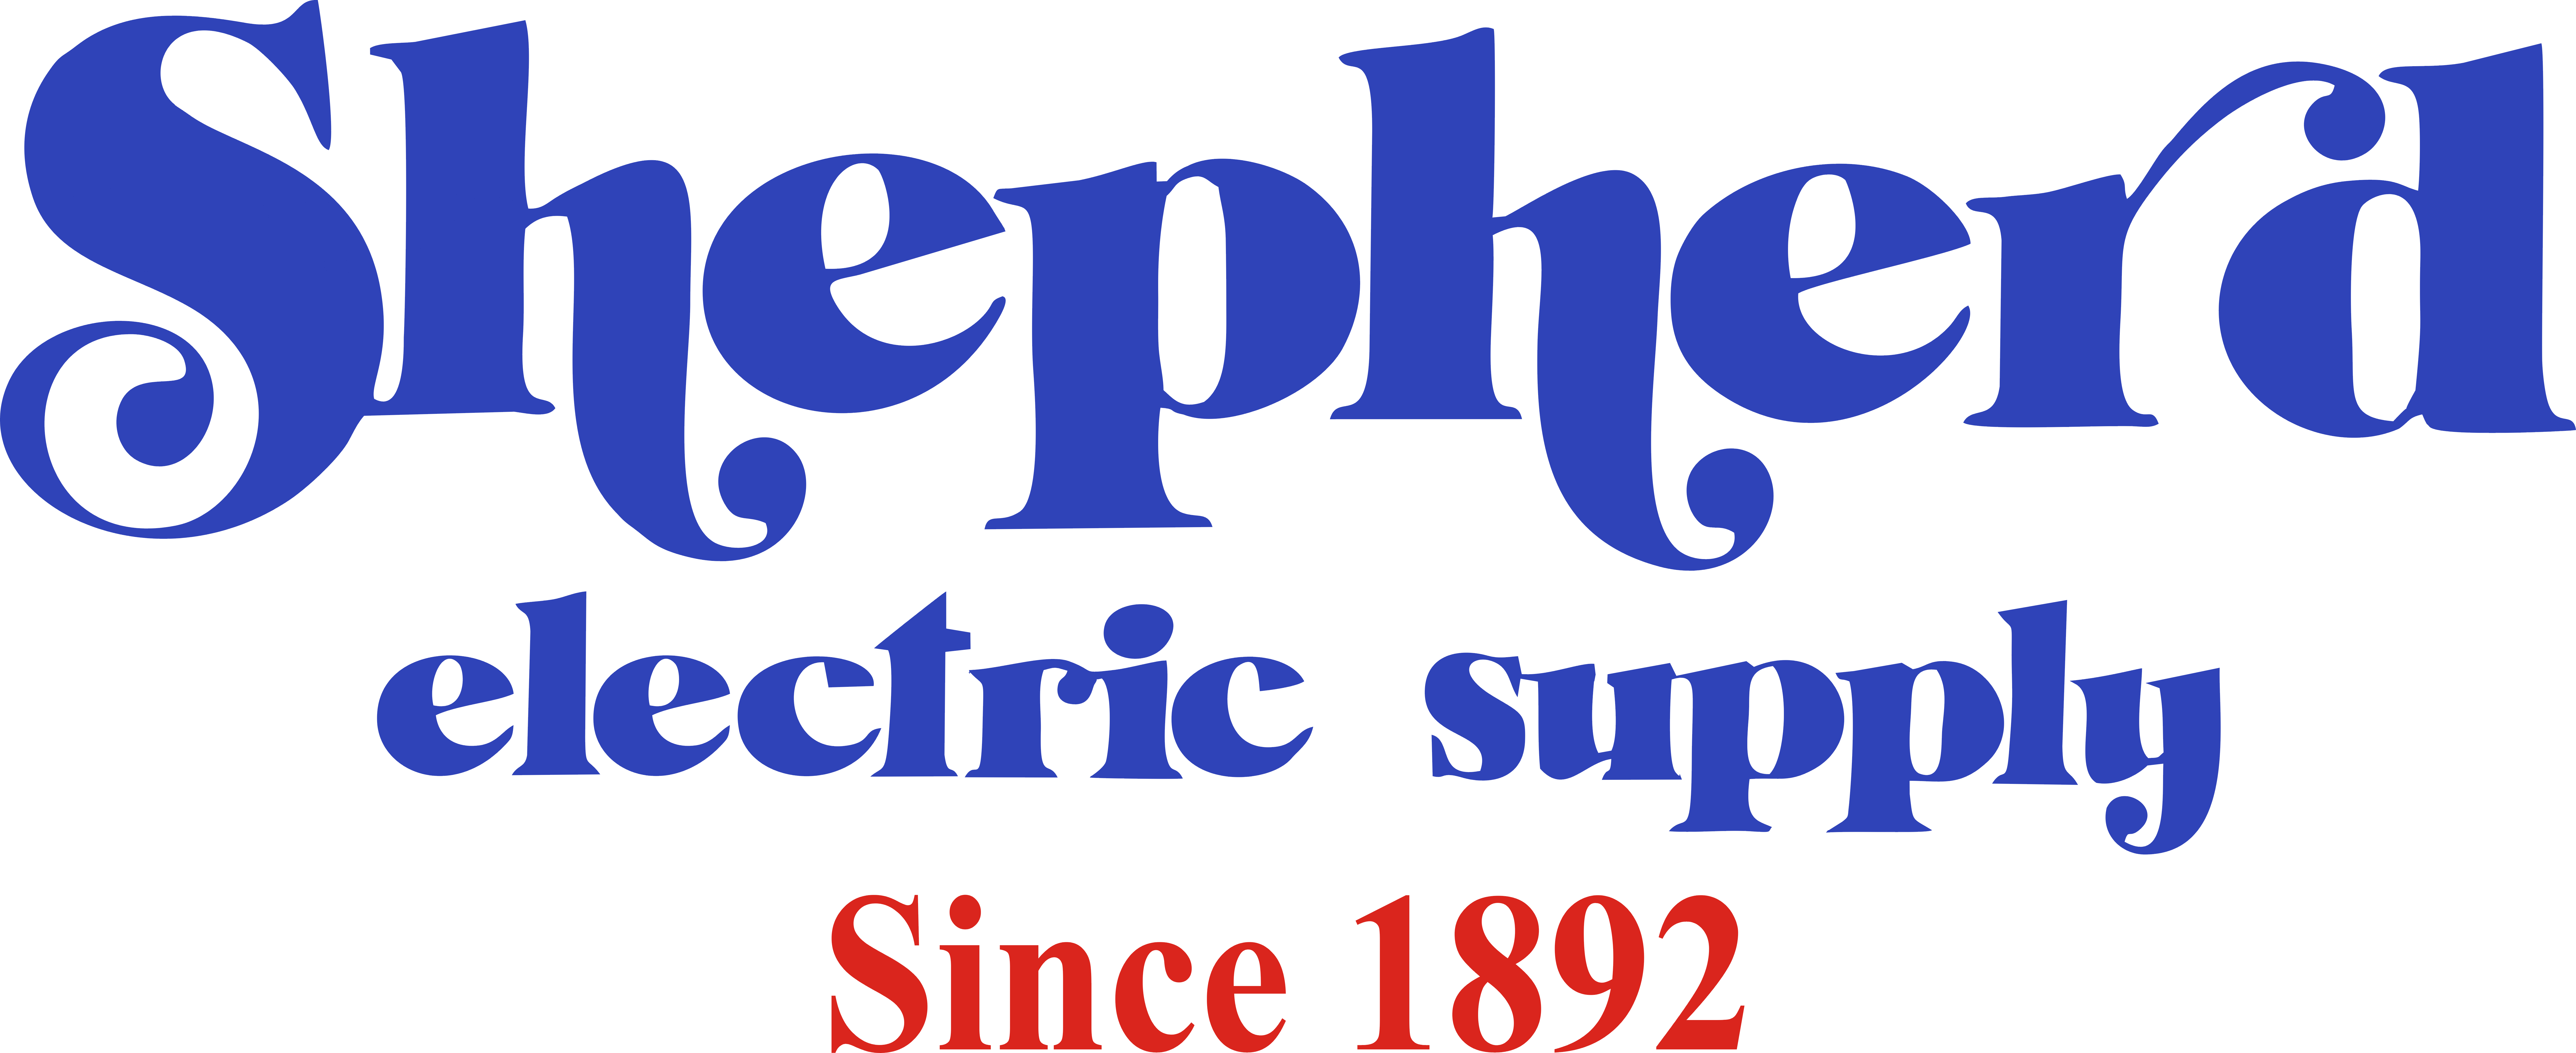 Shepherd Electric Supply logo